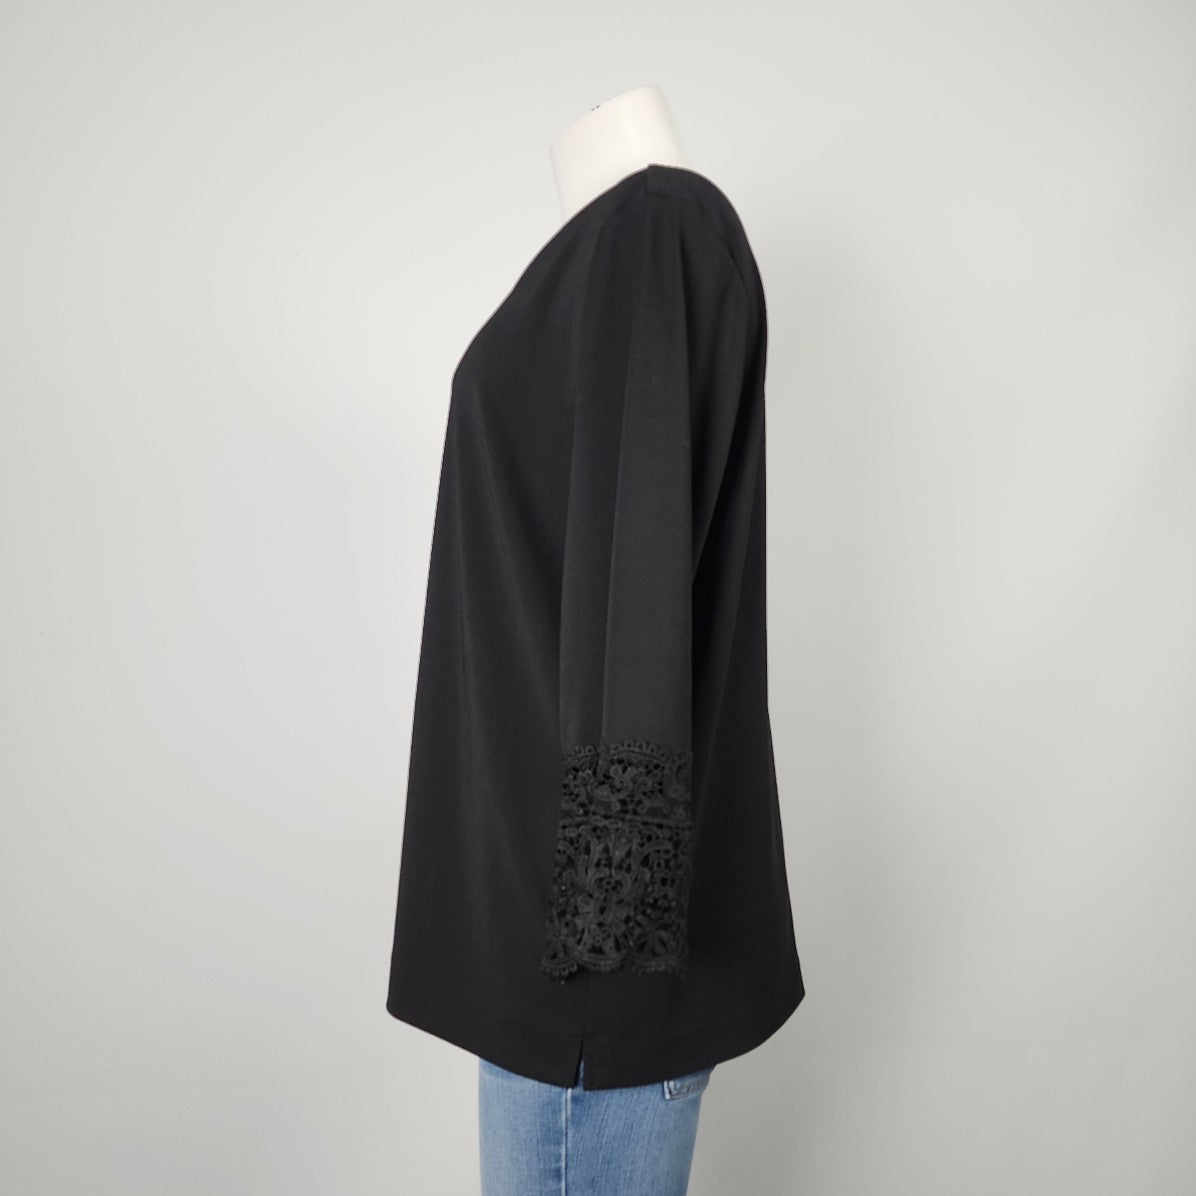 Karl Lagerfeld Black Lace Sleeve Detail Top Size L/XL